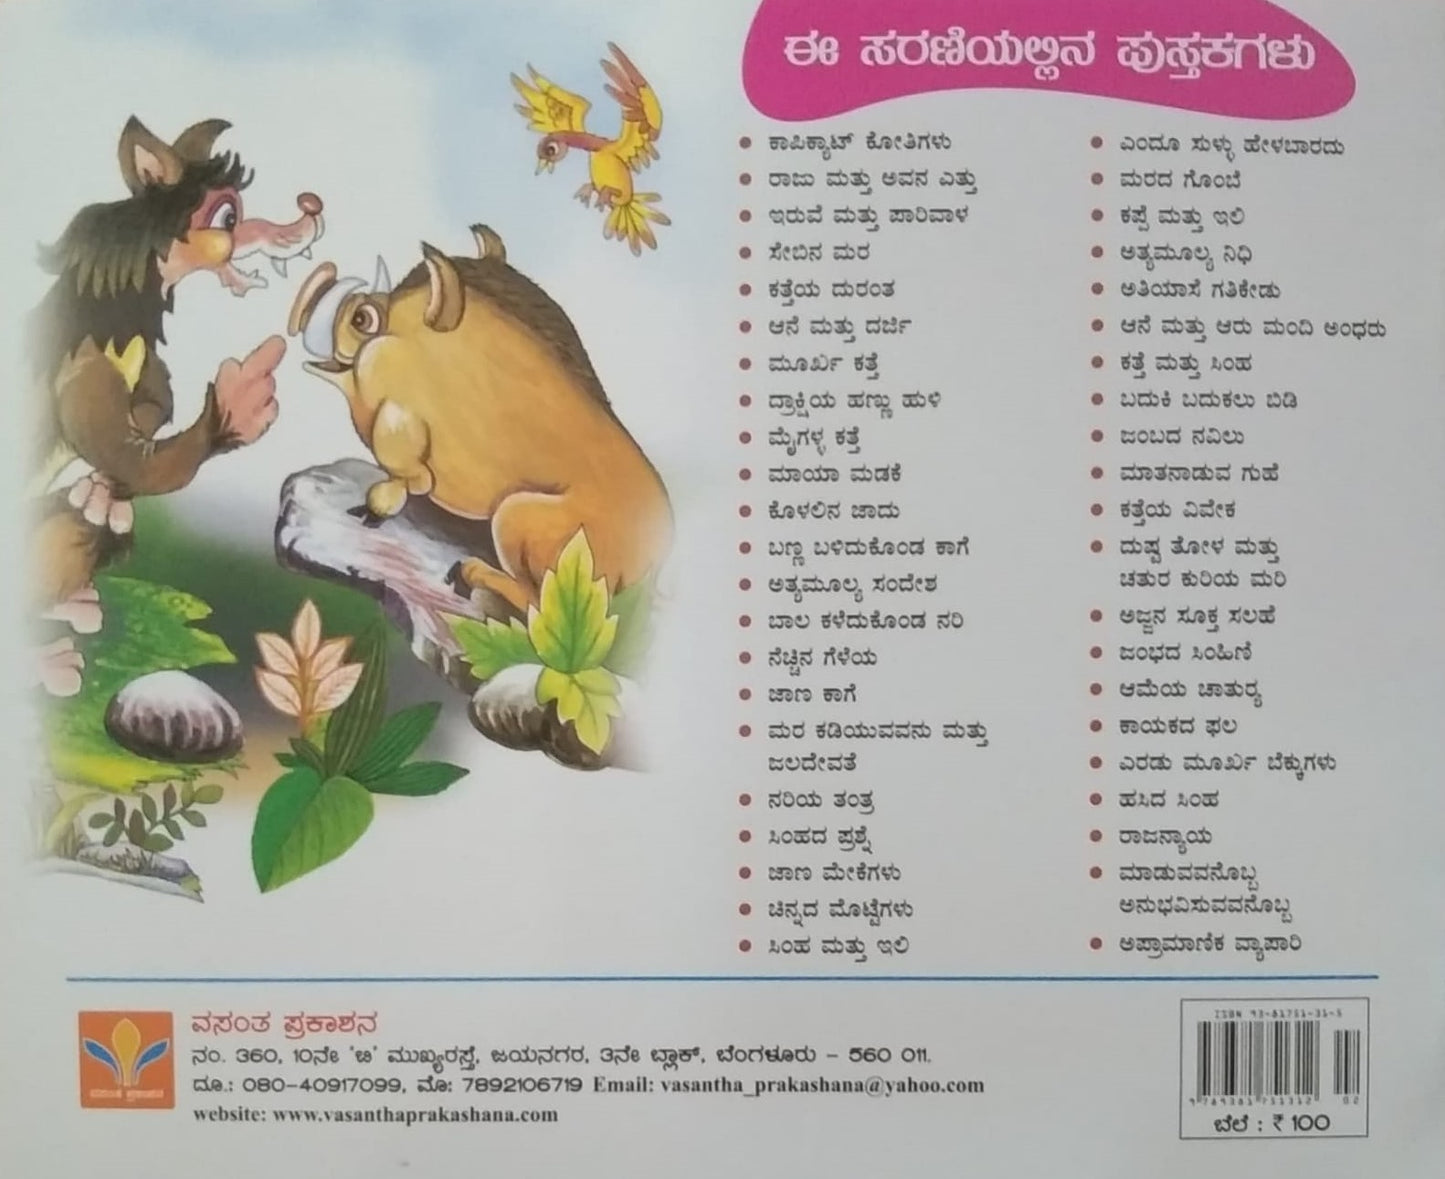 Atiyaase Gatikedu is a children's Stories Book Edited by S. Pattabhirama and Published by Vasantha Prakashana